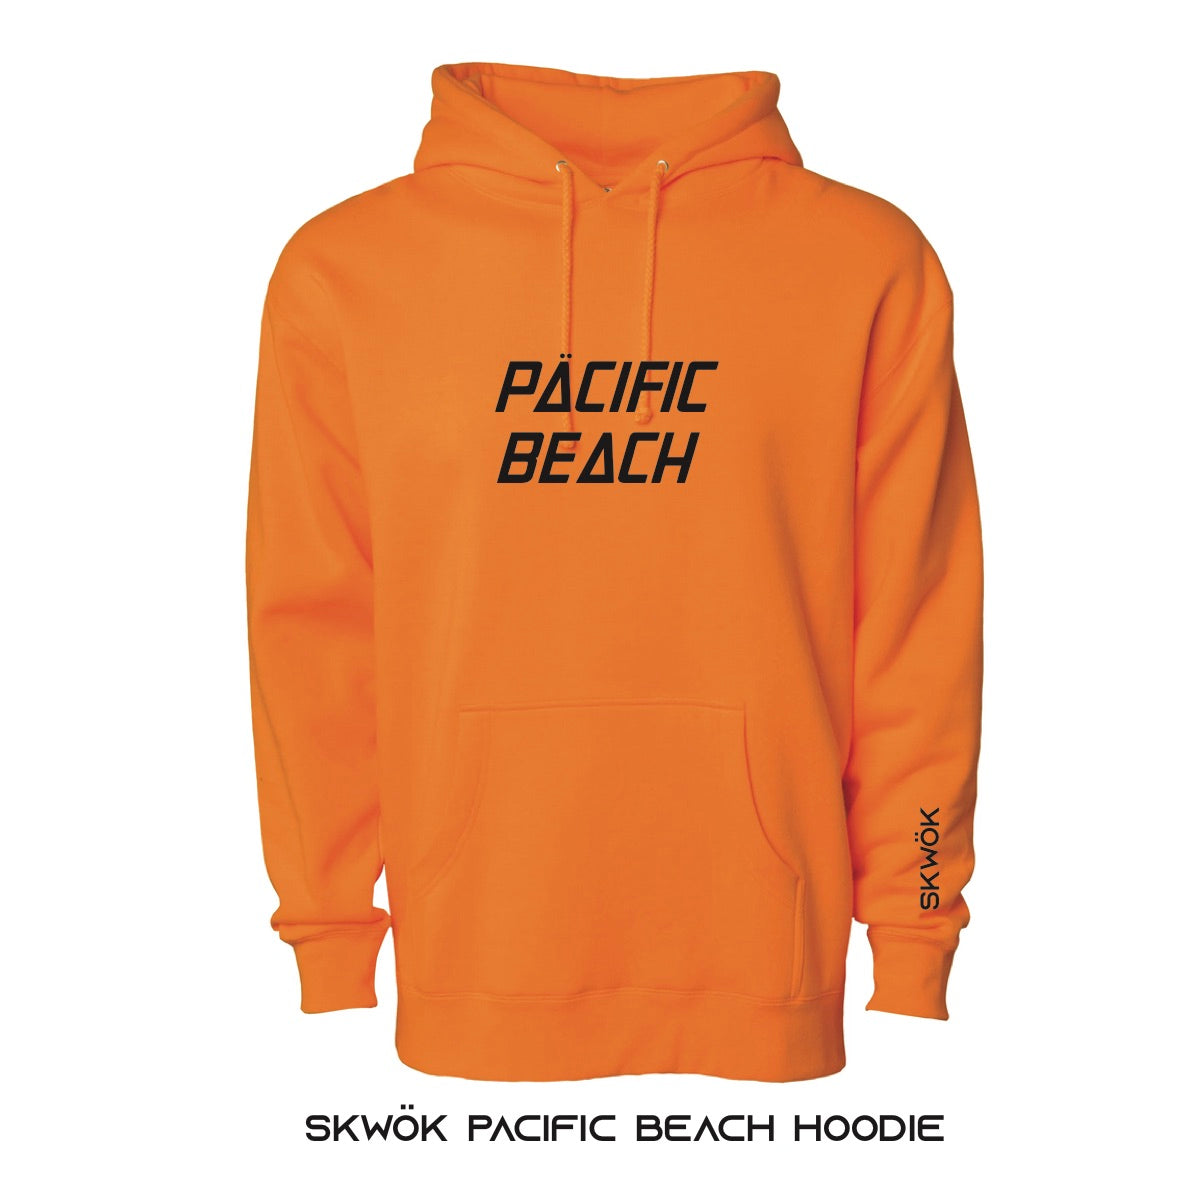 Skwok Pacific Beach Hoodie - 10oz - Safety Orange